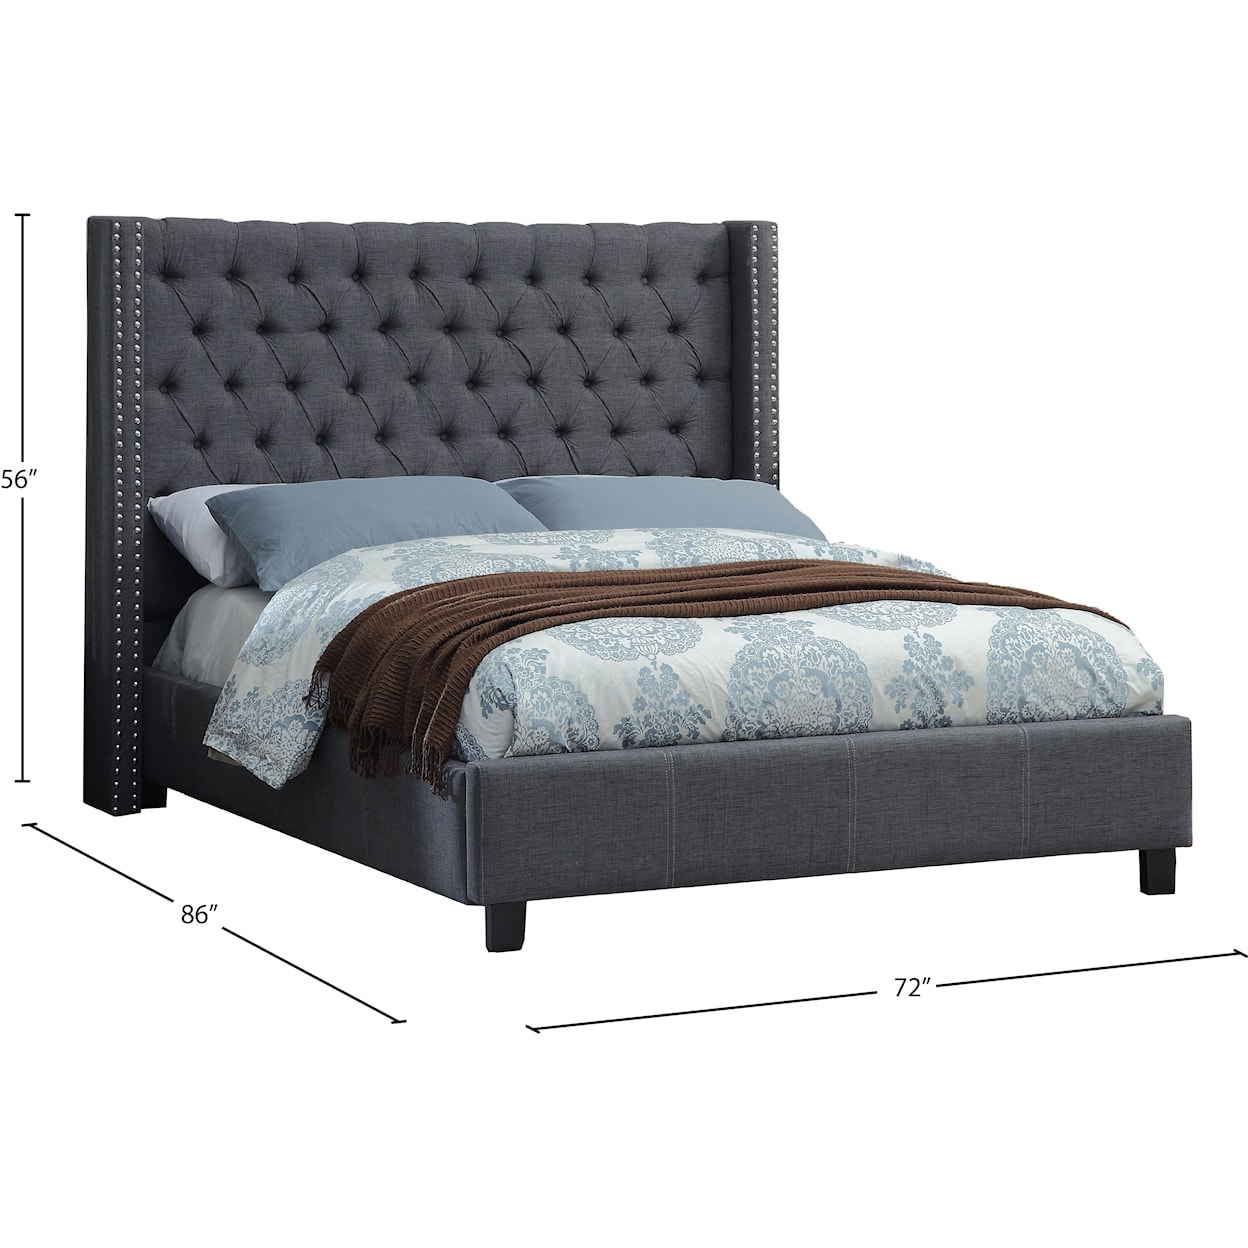 Meridian Furniture Ashton Queen Bed